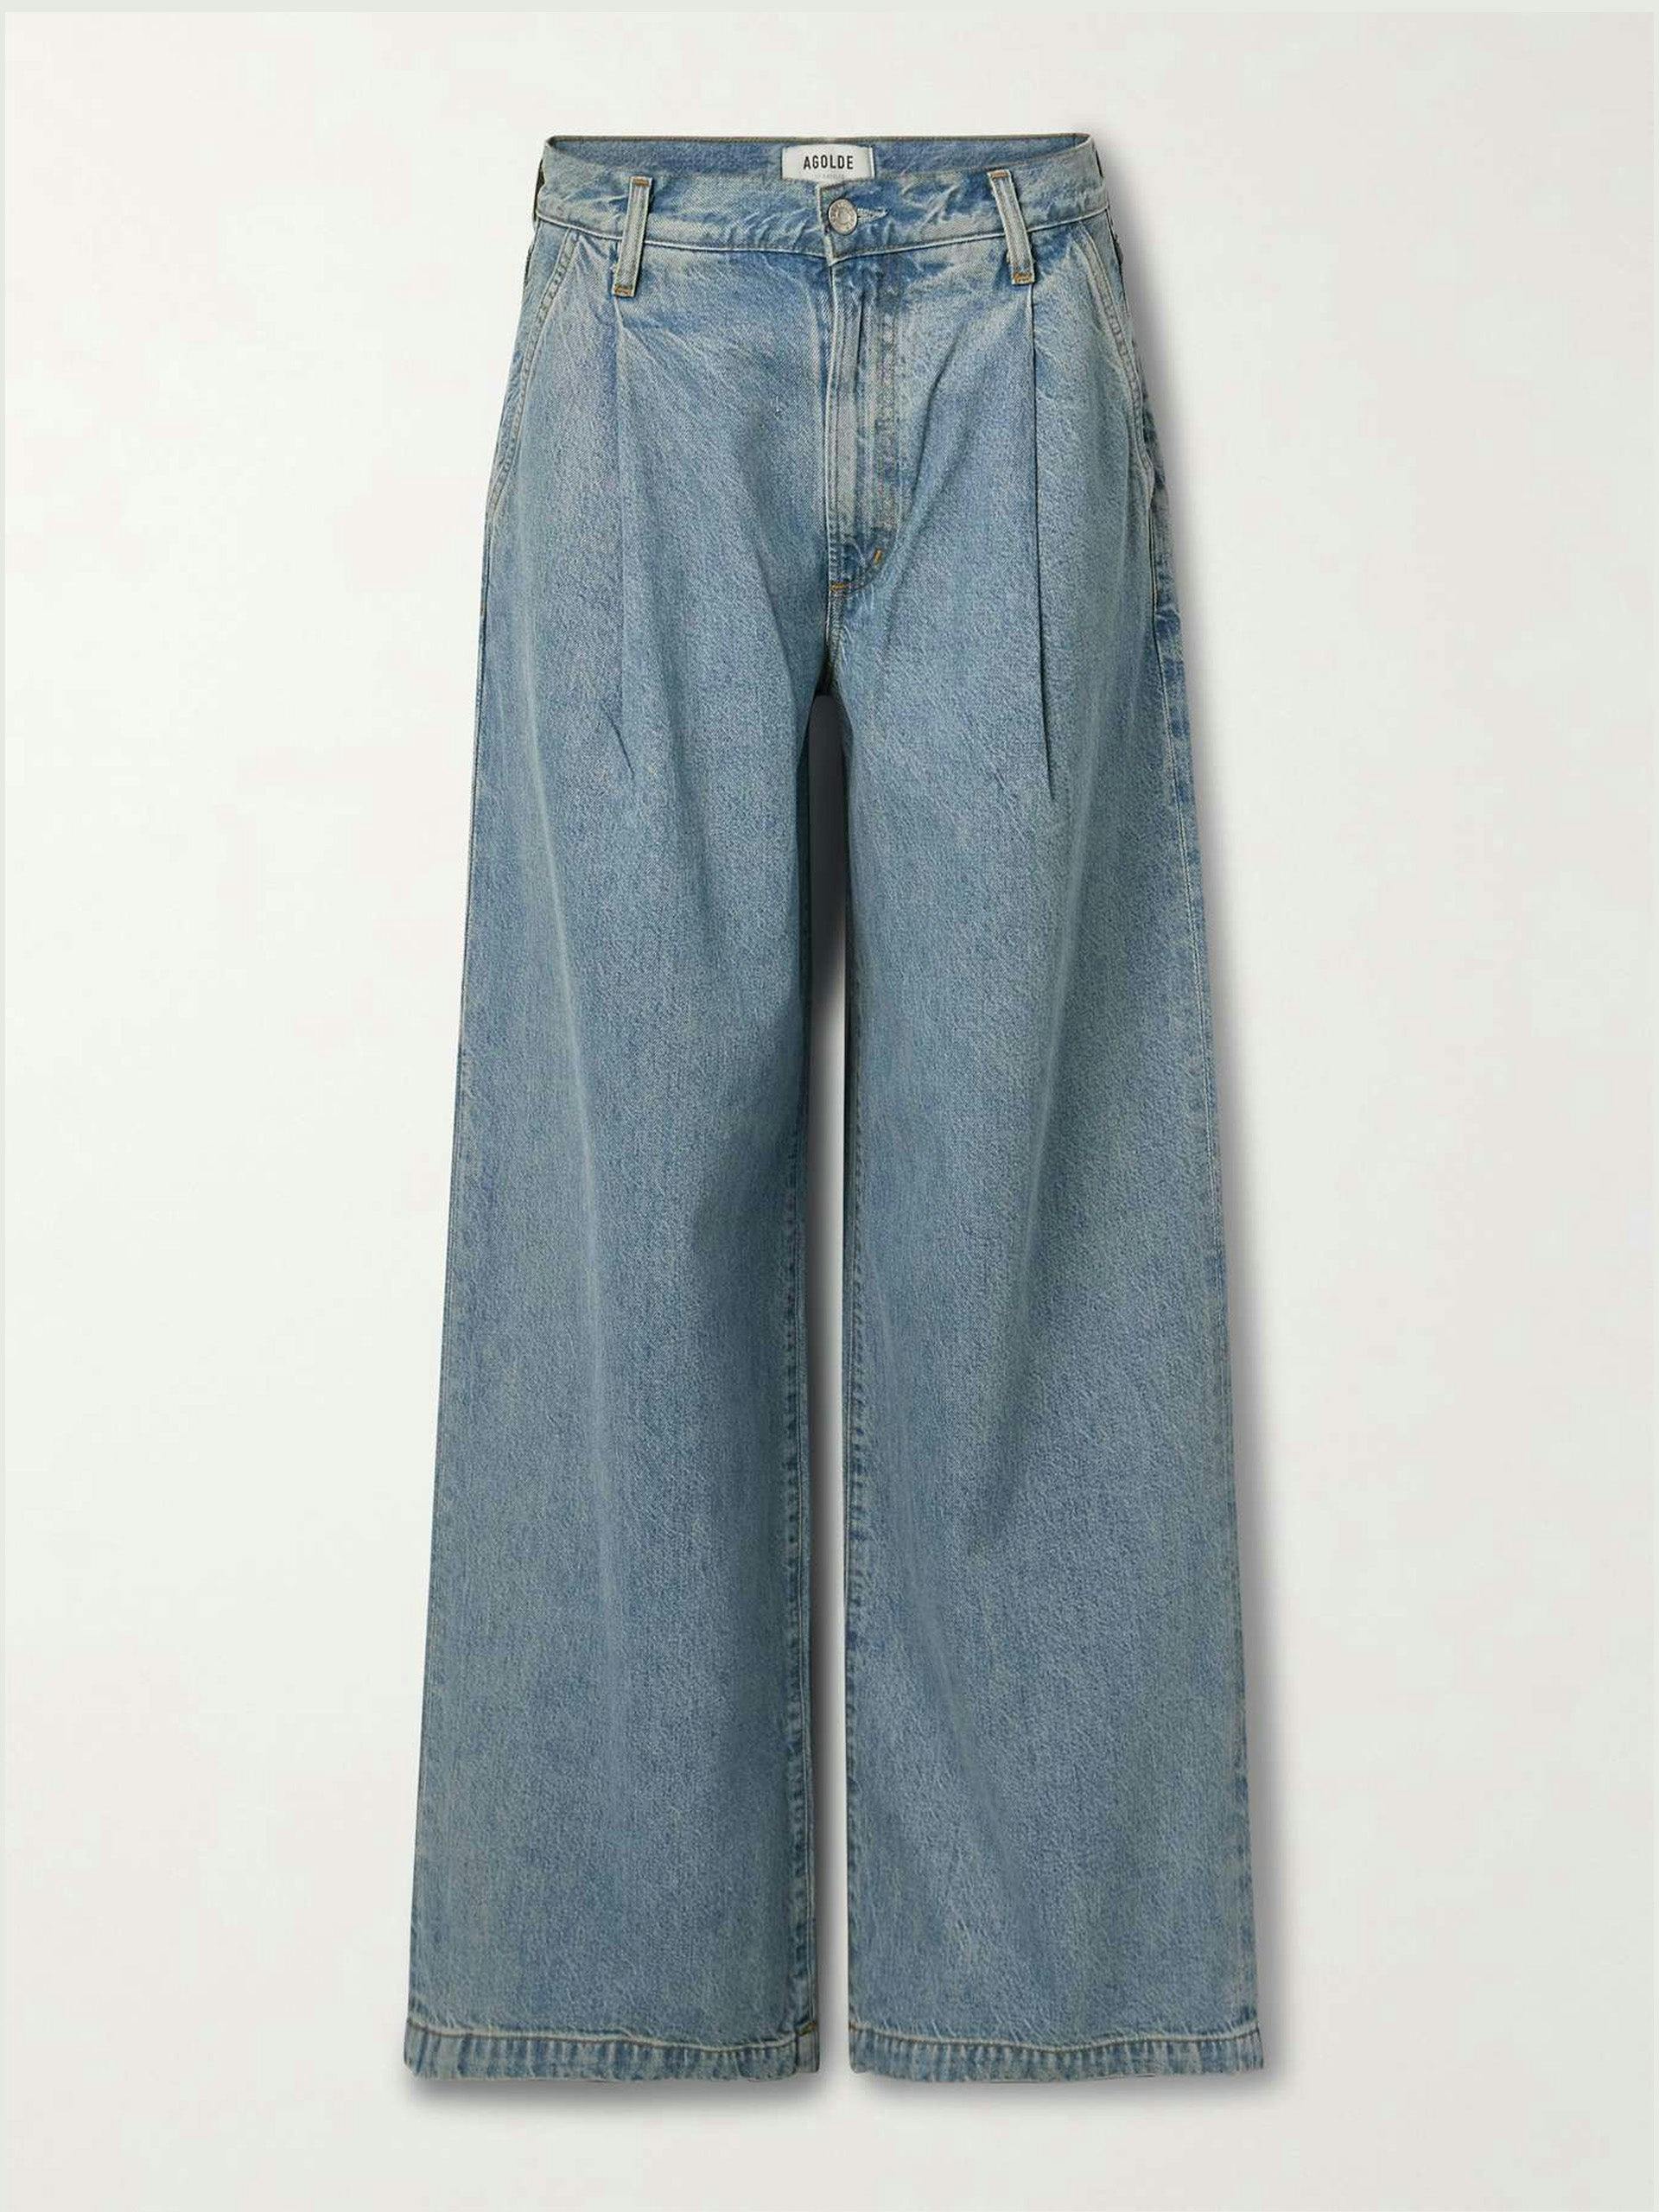 Ellis pleated low-rise wide-leg jeans